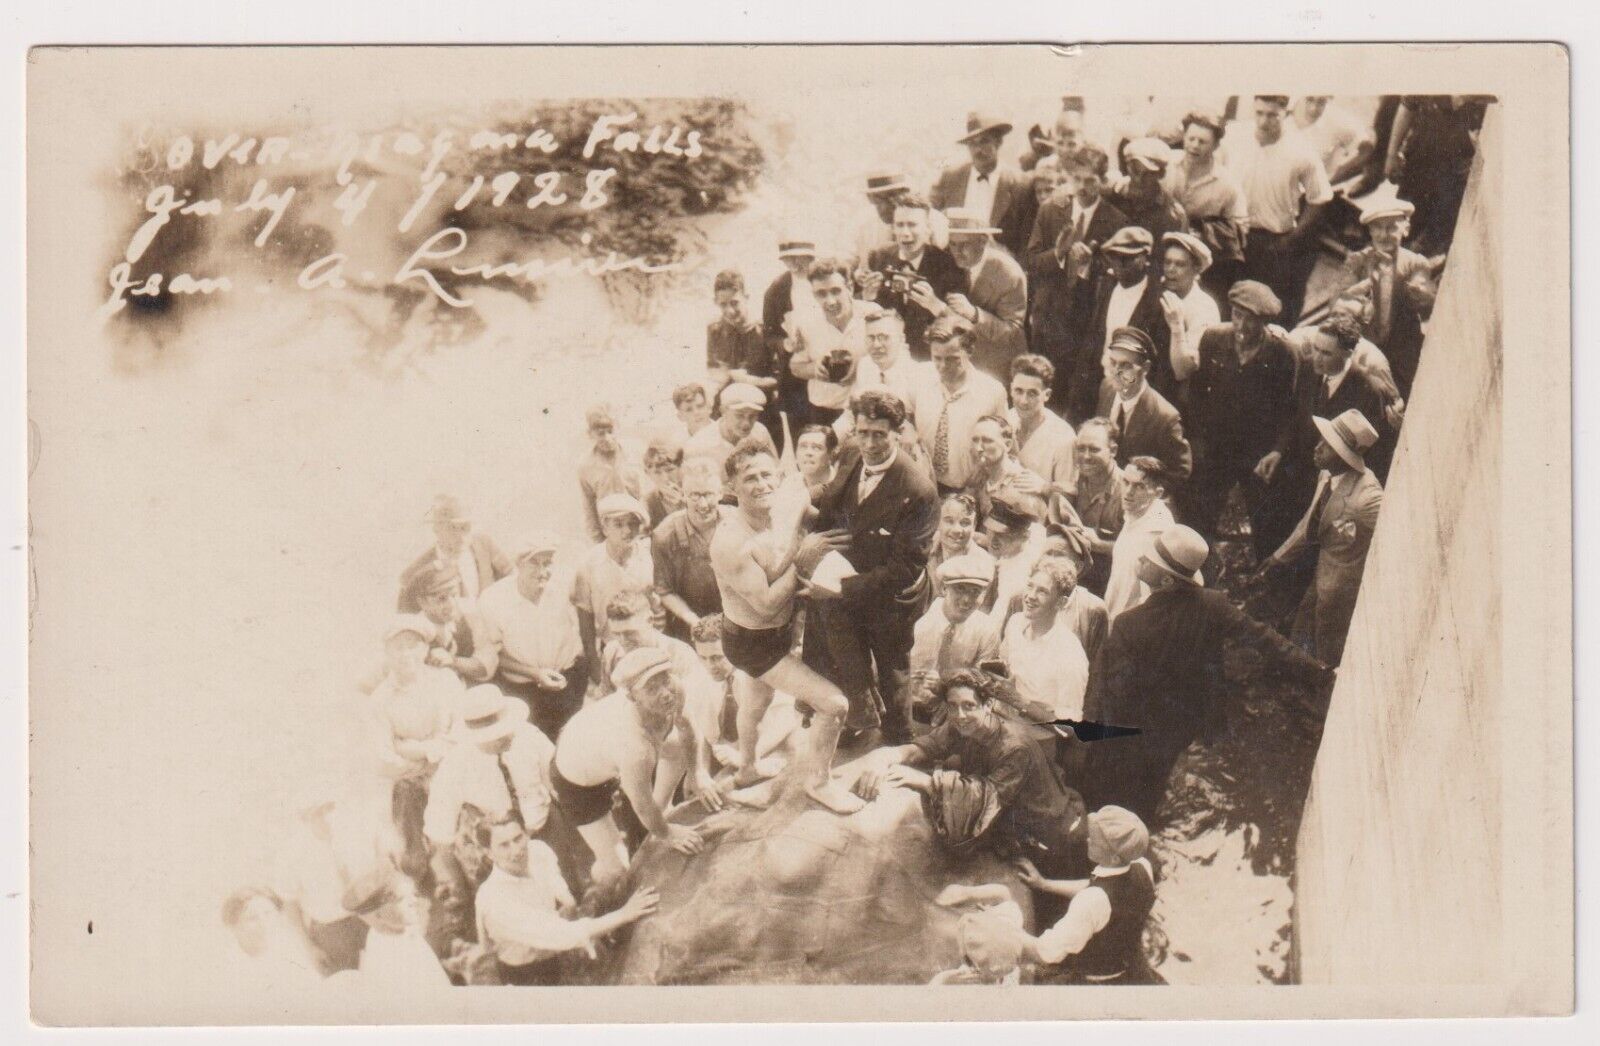 1928 RPPC Jean Albert Lussier Over Niagara Falls in a Rubber Ball